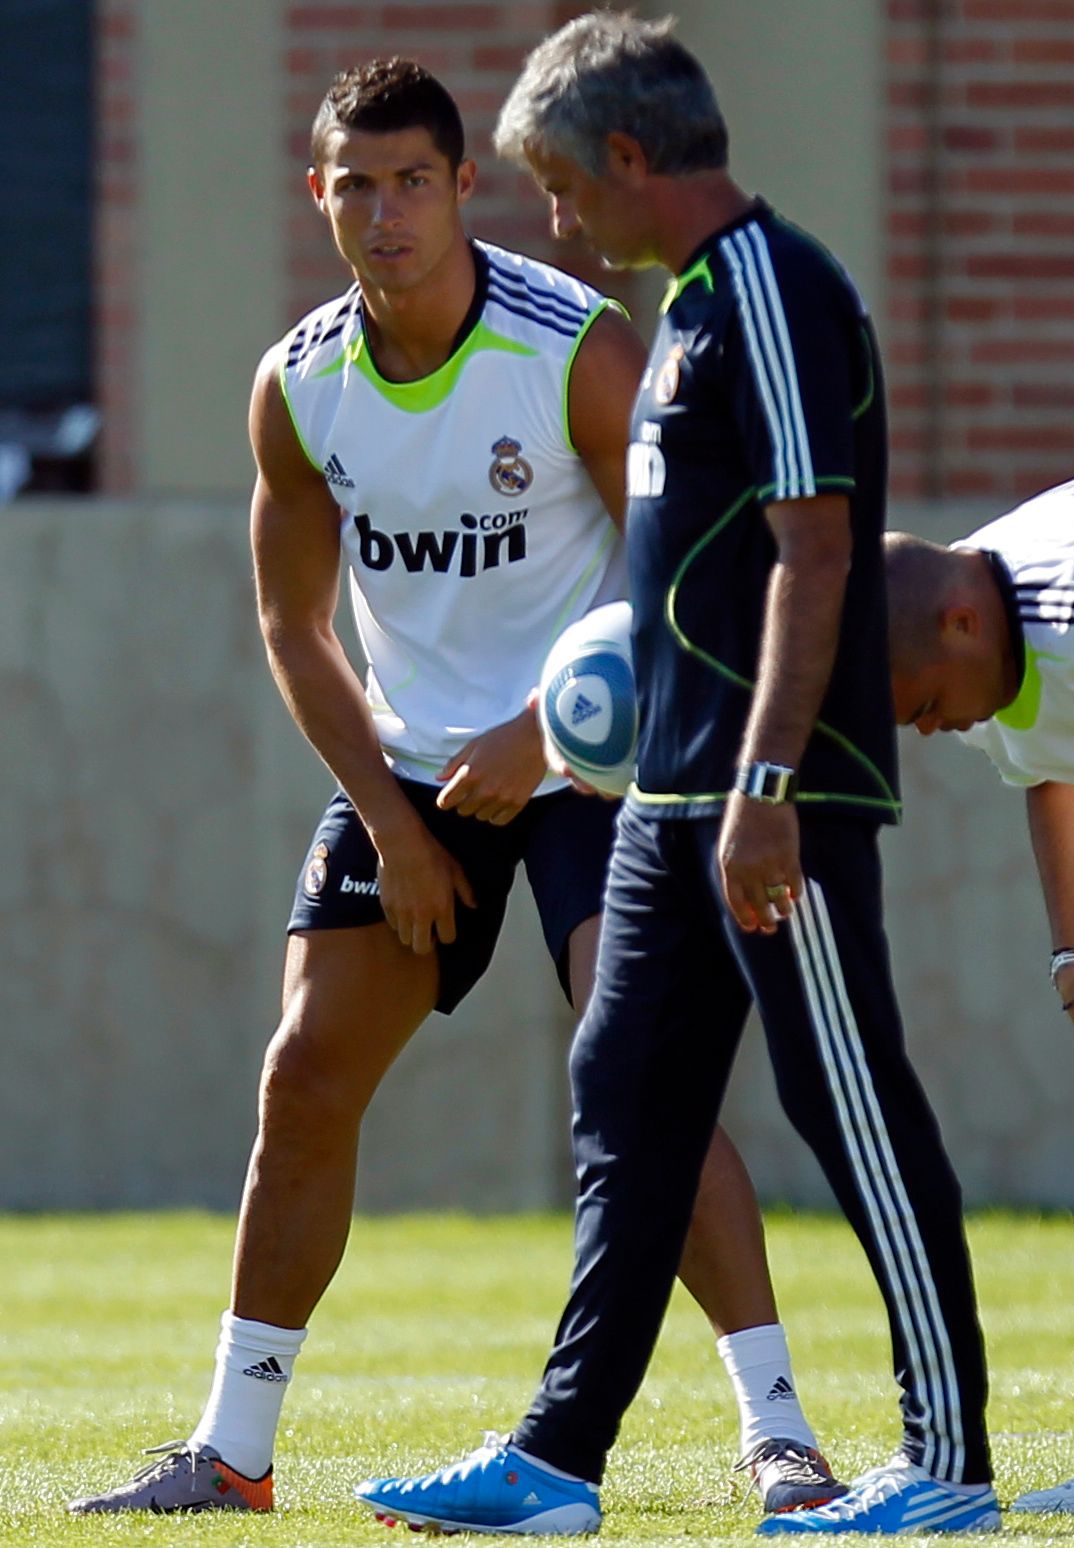 Real Madrid coach Mourinho talks to forward Ronaldo during training in Los Angeles